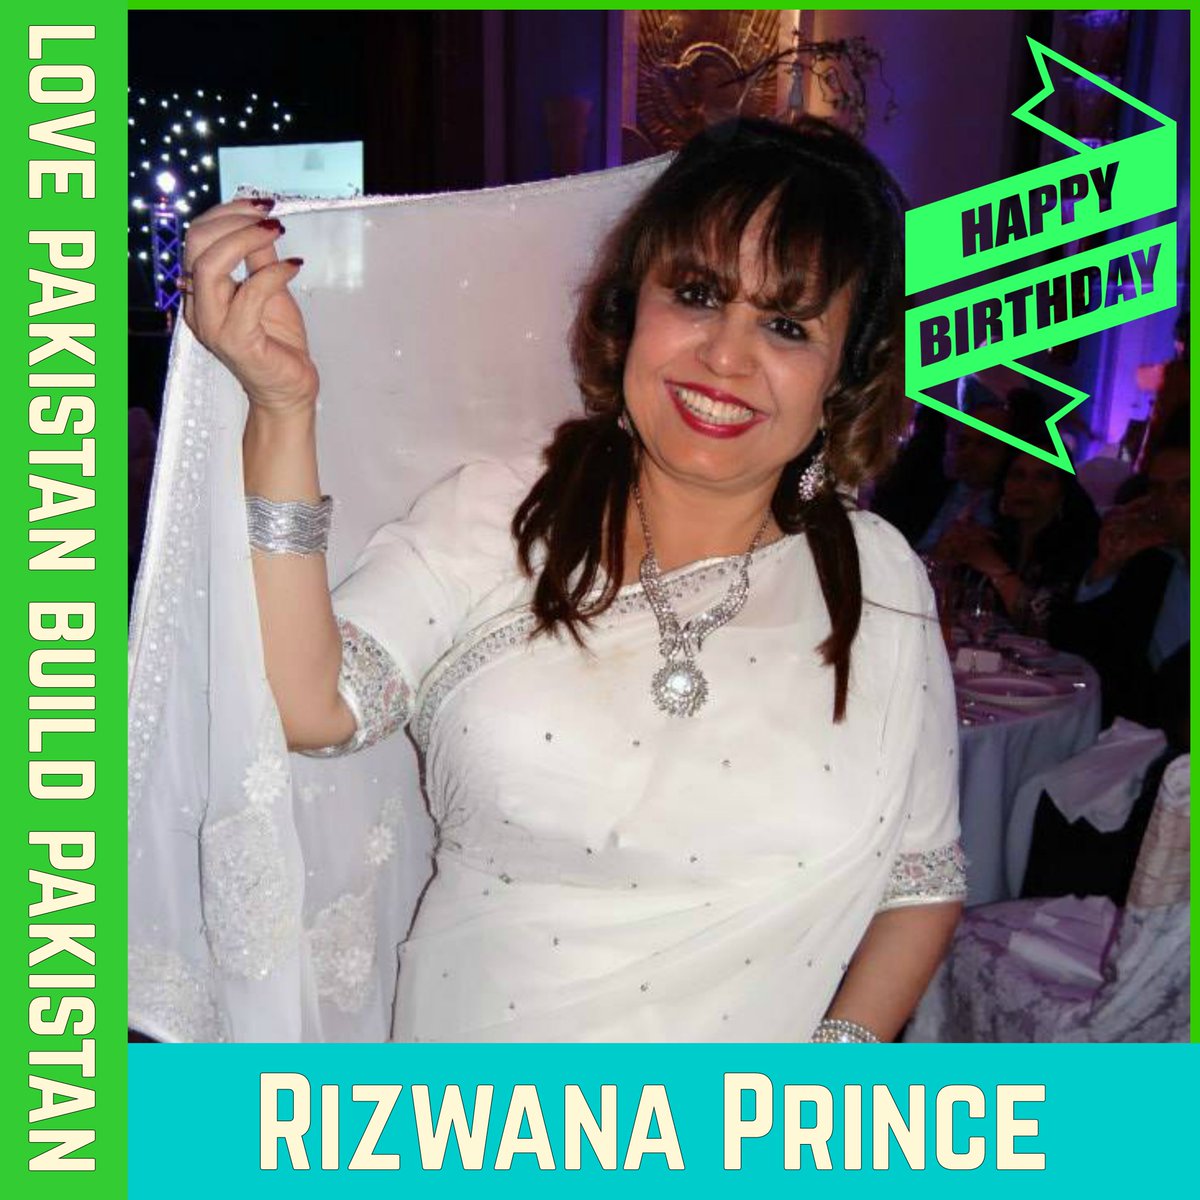 Many many happy returns of the day to Rizwana Prince!

#HappyBirthday #PrideofPakistan #RizwanaPrince #Writer #EkLarkiPagalSi #LogKiaKahengay #IshqMein #IamPakistan #LovePakistanBuildPakistan